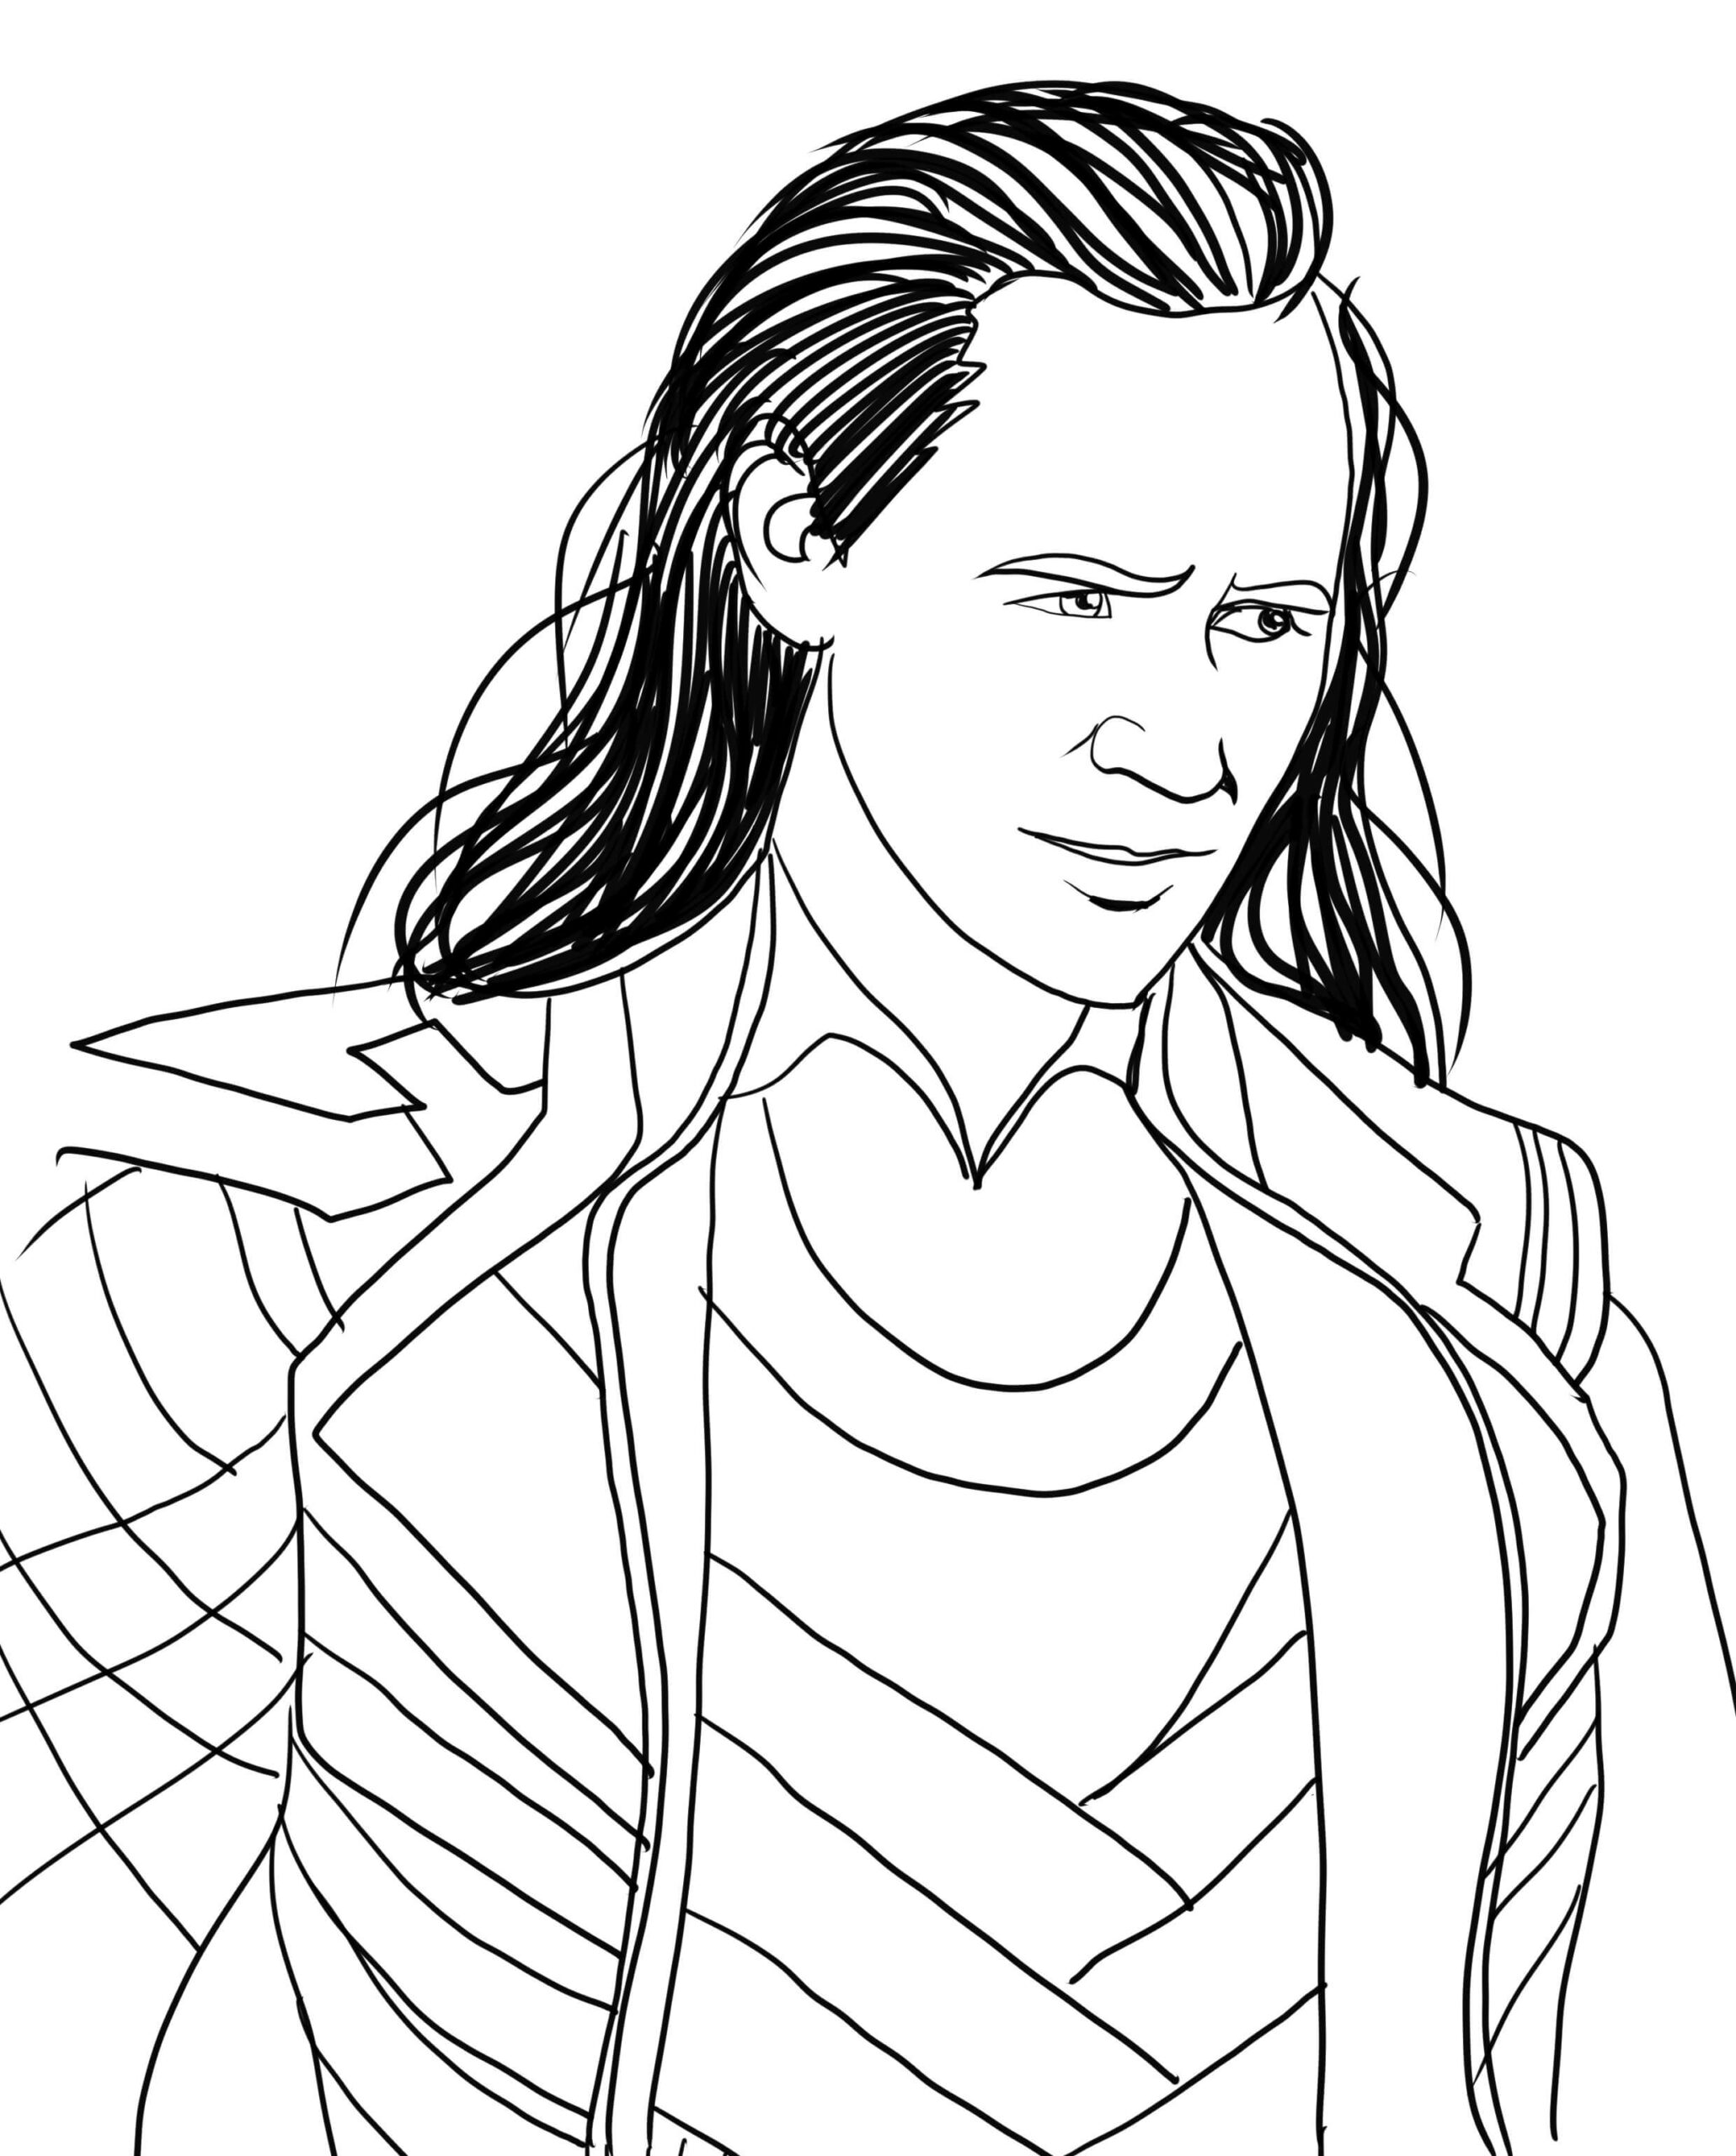 Loki Marvel coloring page